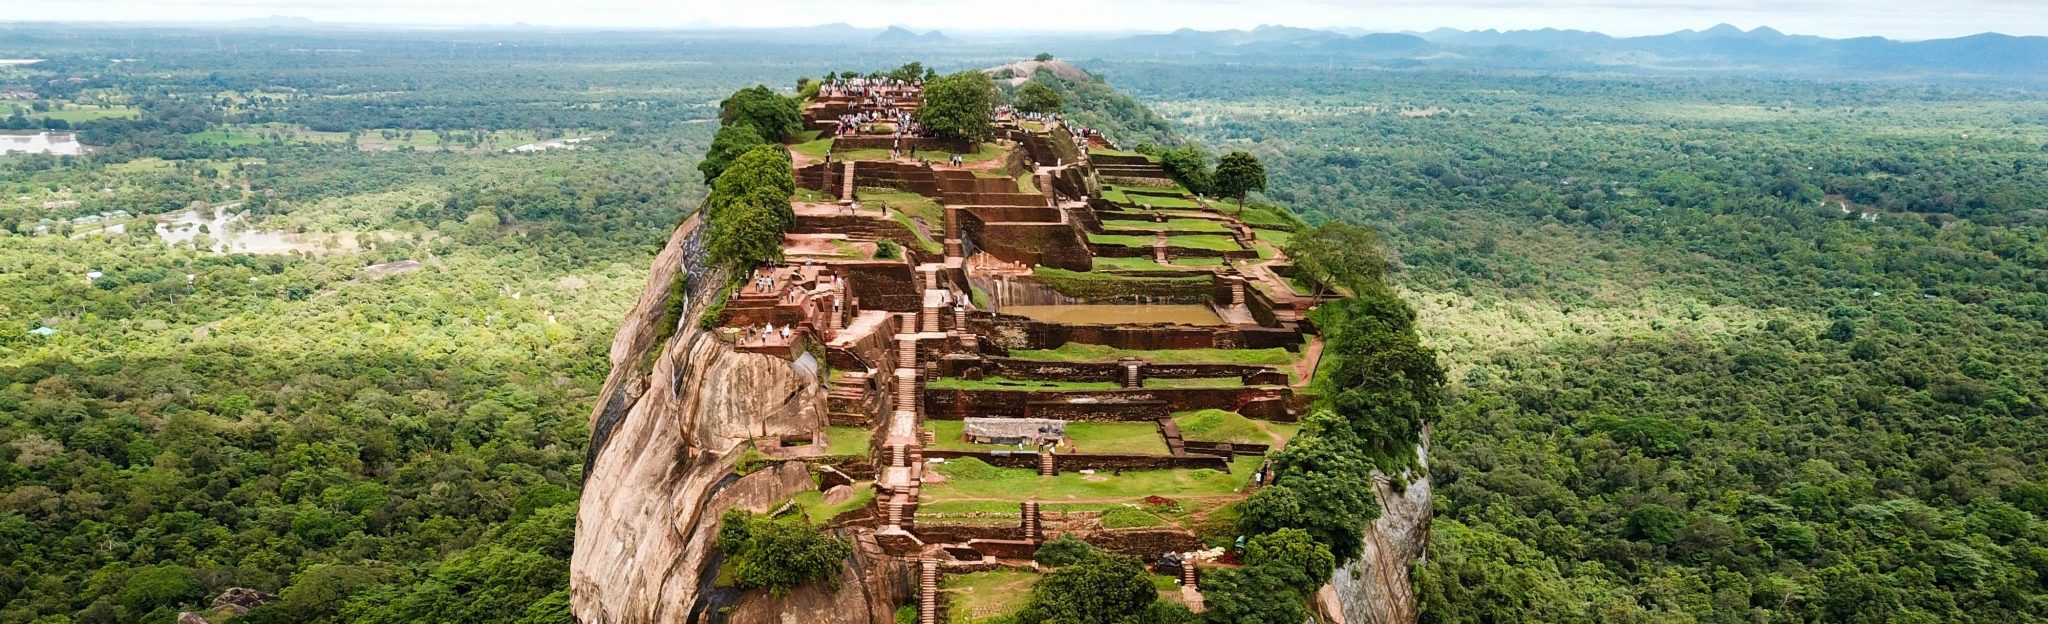 10 Interesting Facts About Sigiriya, Sri Lanka